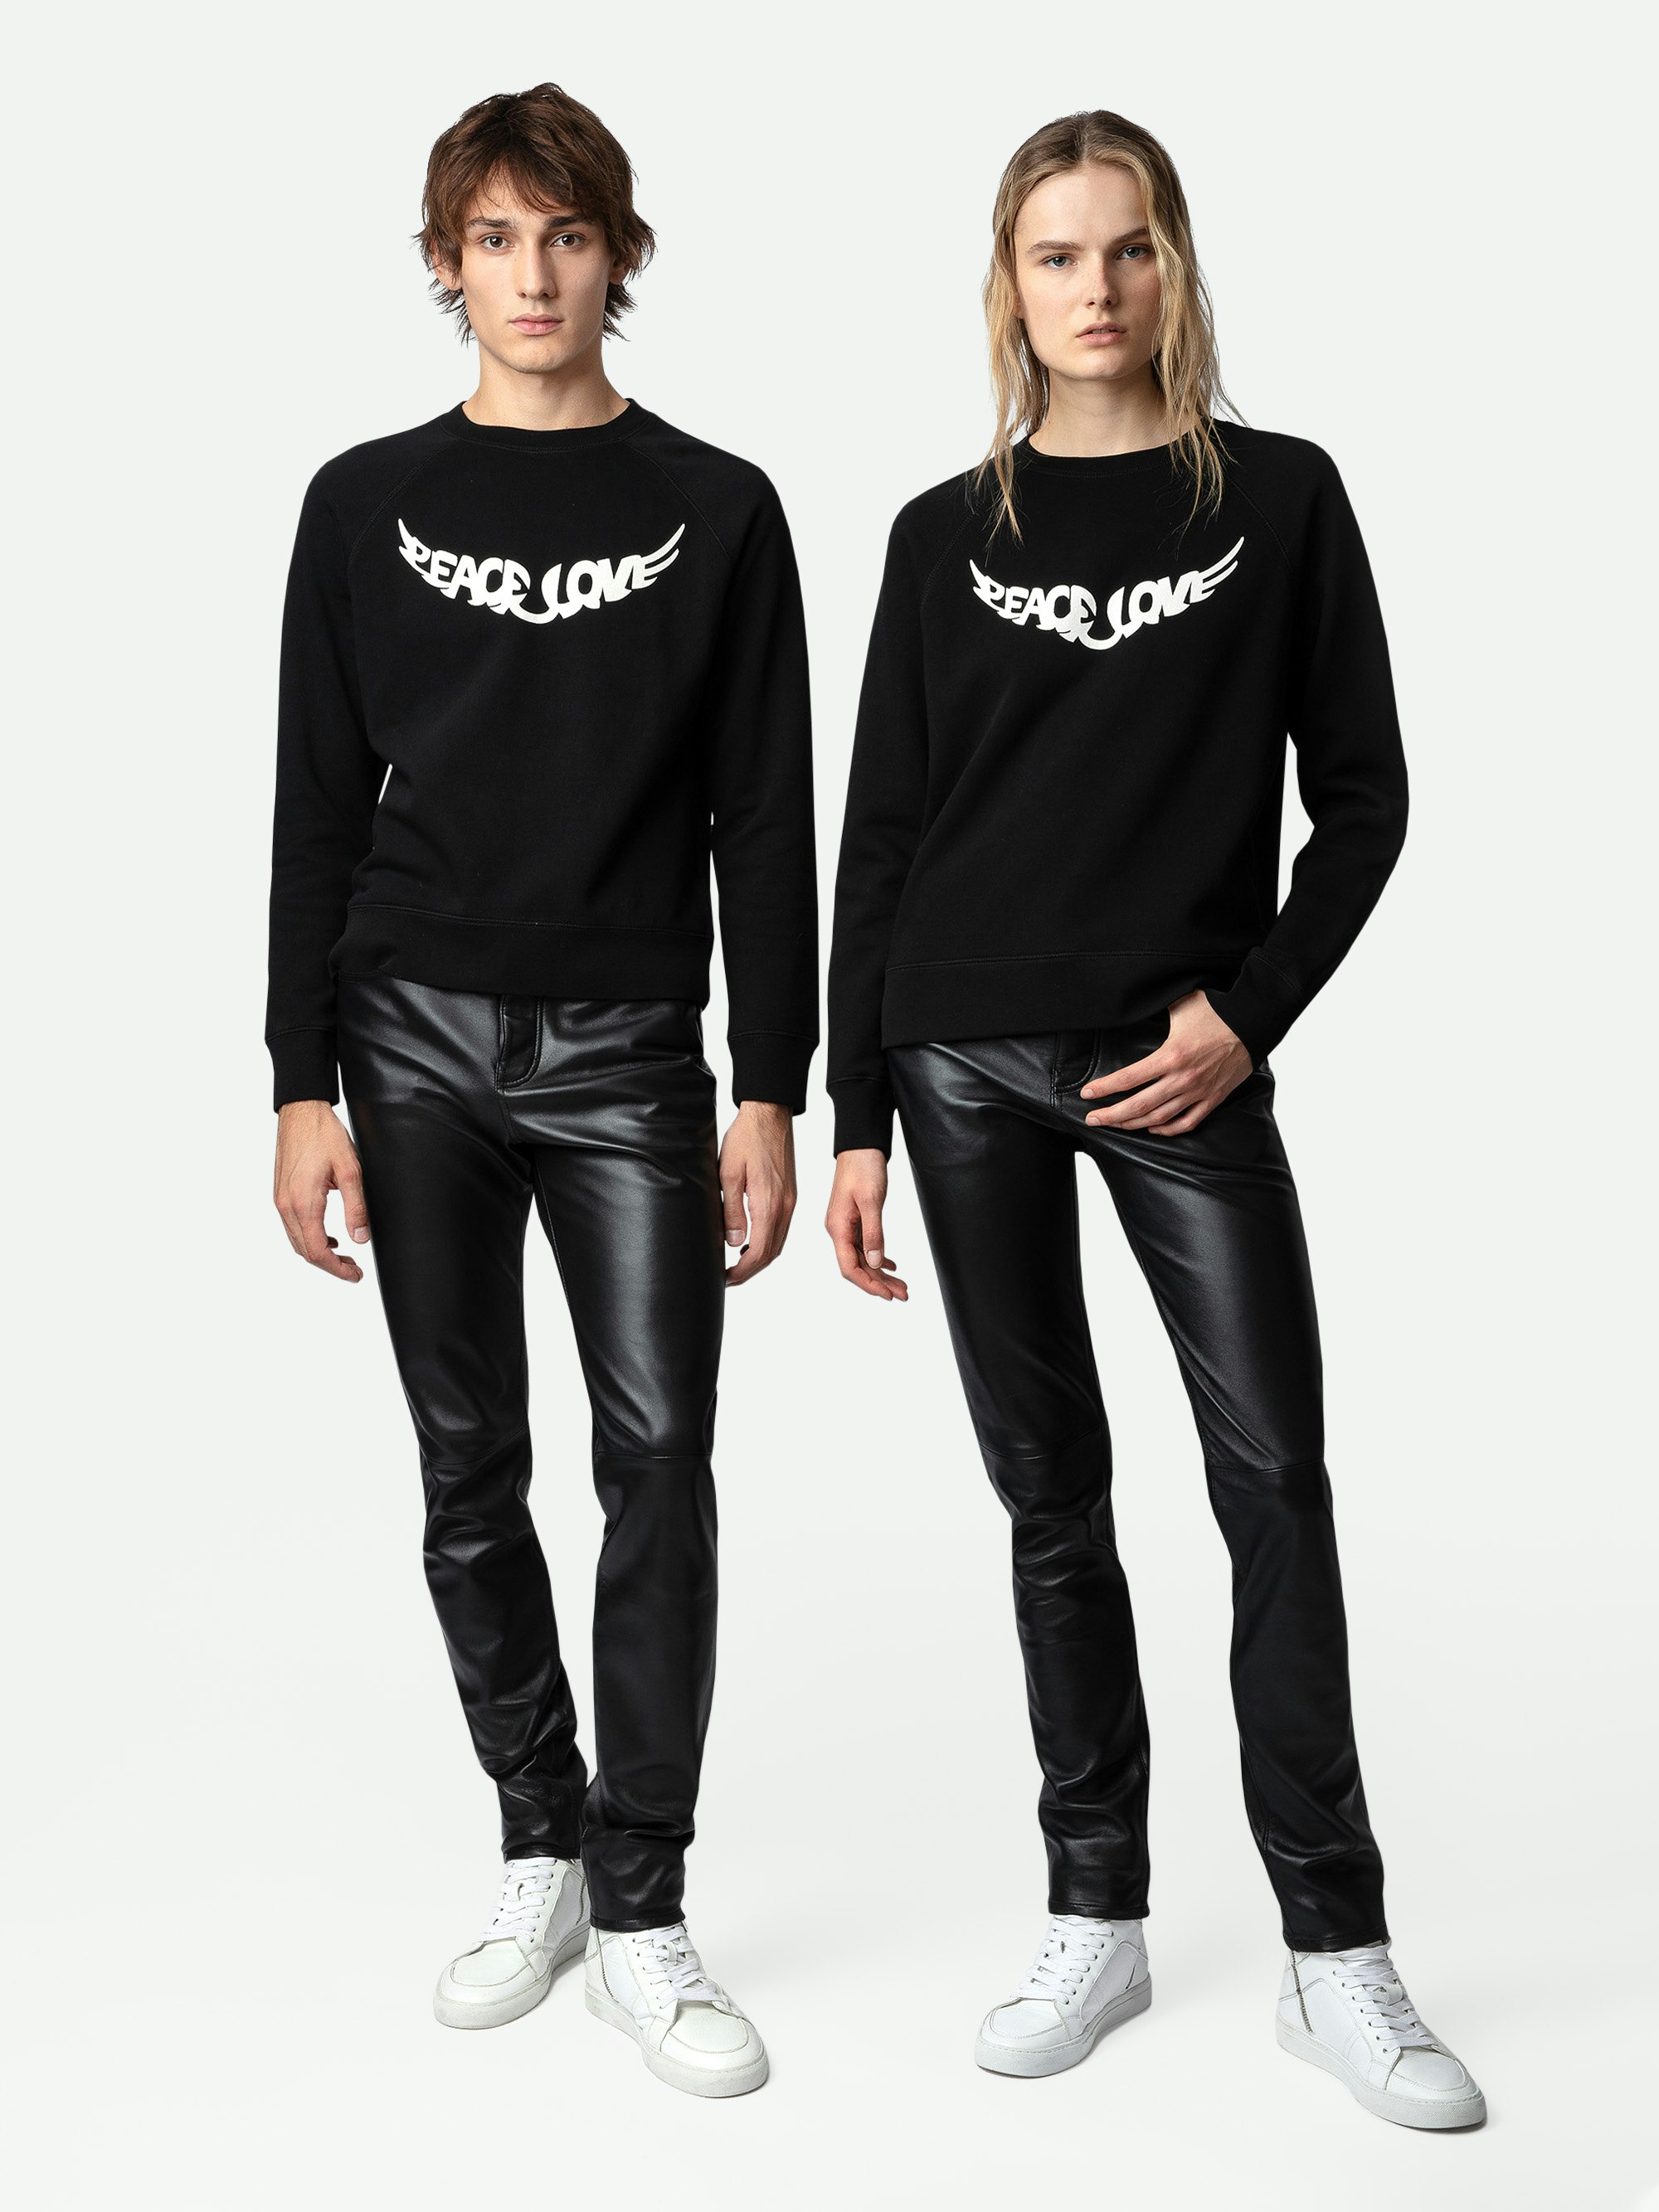 Sweatshirt Upper Peace & Love - Schwarzes Damen-Sweatshirt aus Baumwolle mit flügelförmigem Schriftzug „Peace & Love“.